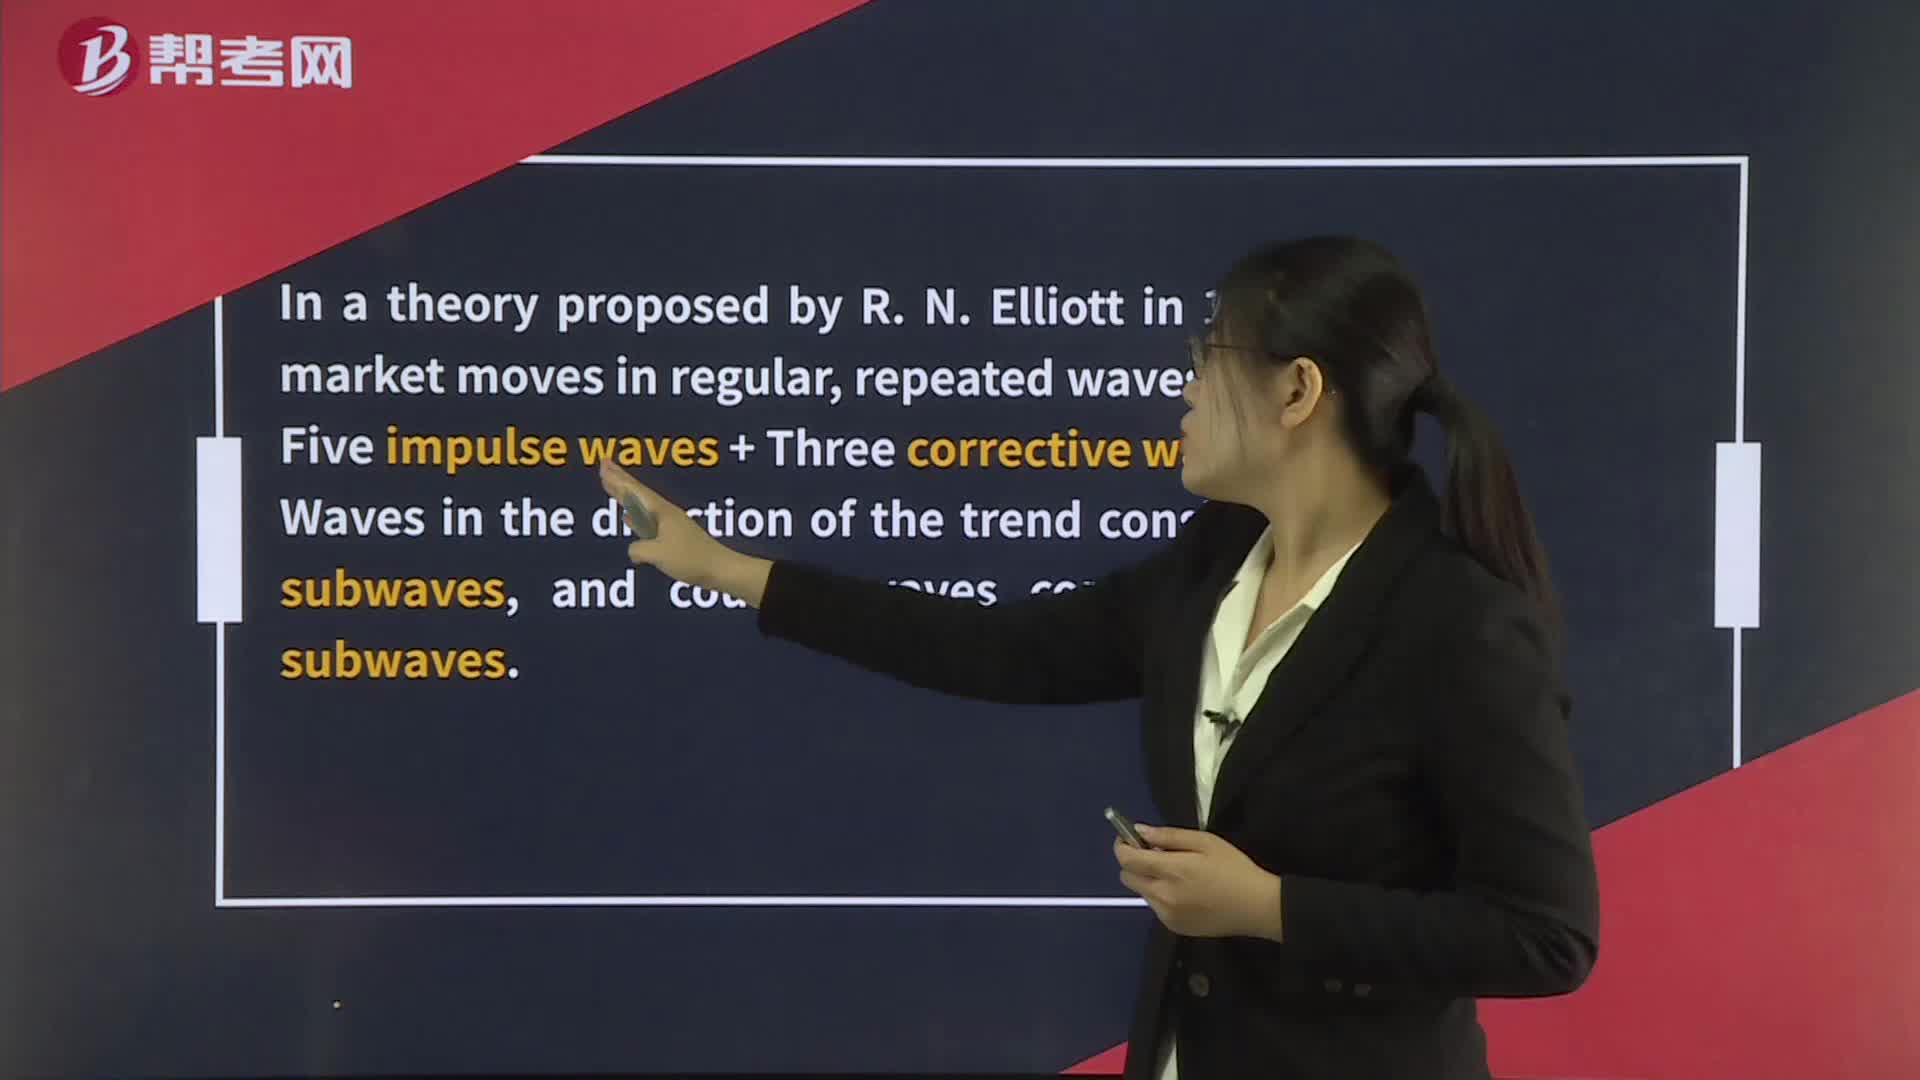 Elliott Wave Theory